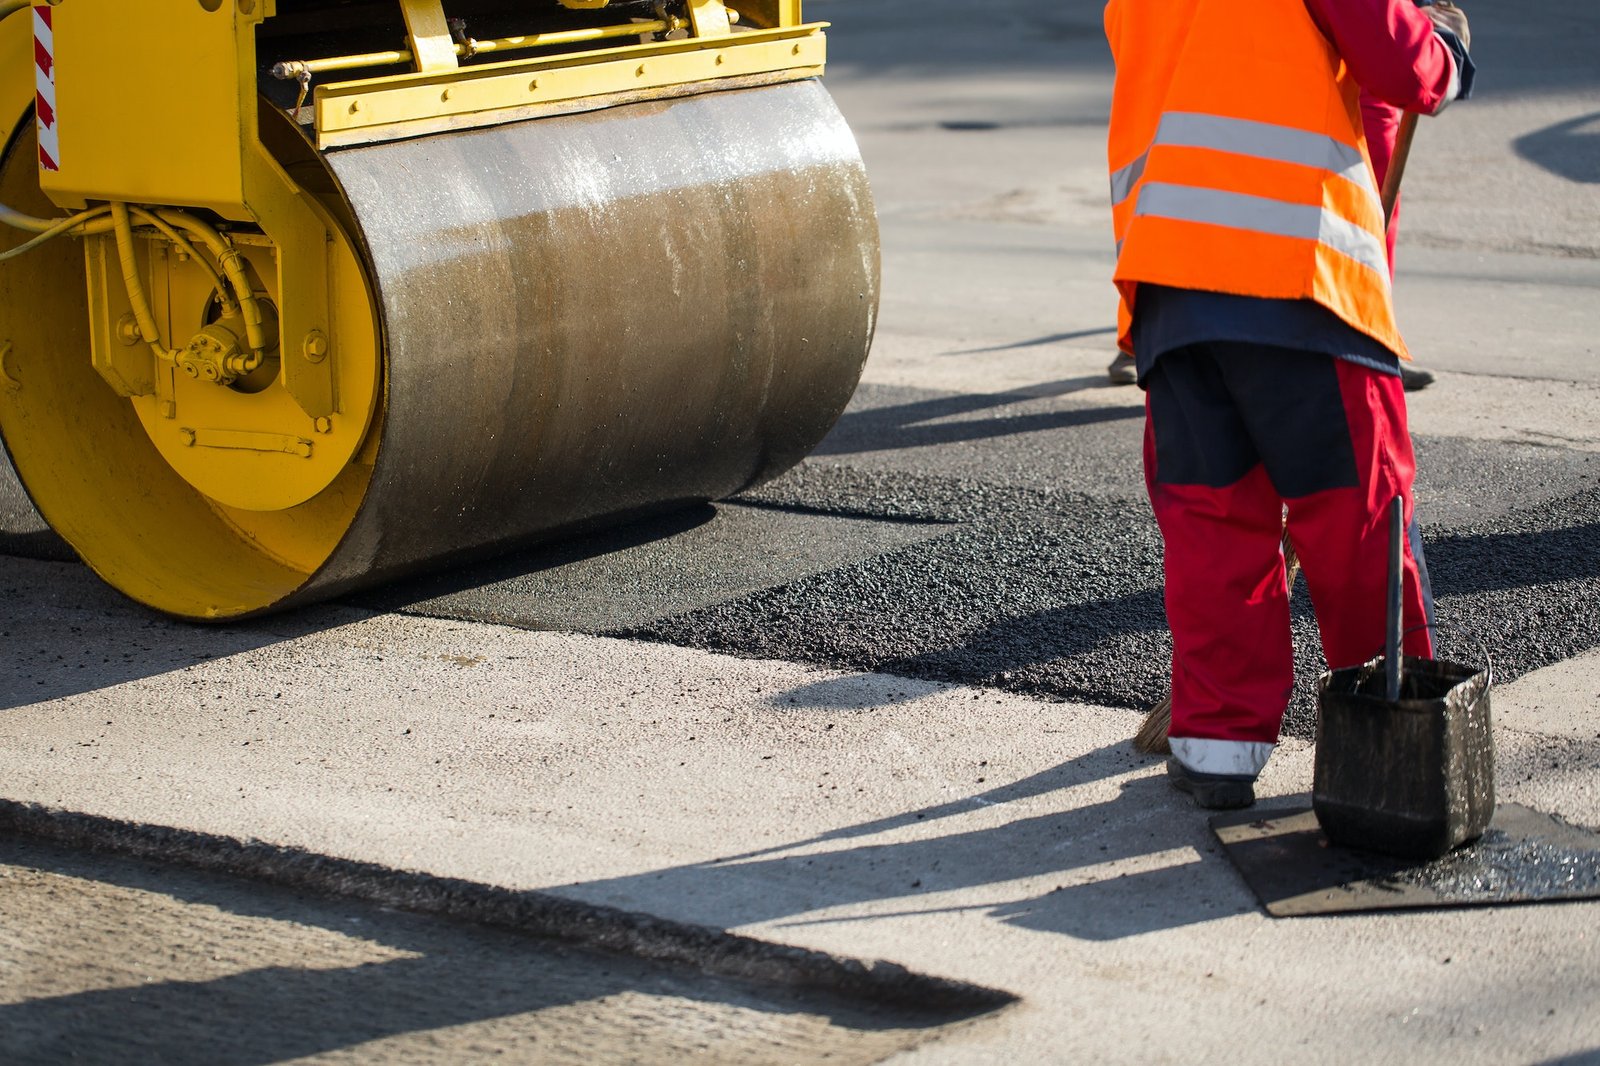 Road repairs. A road roller compacting asphalt